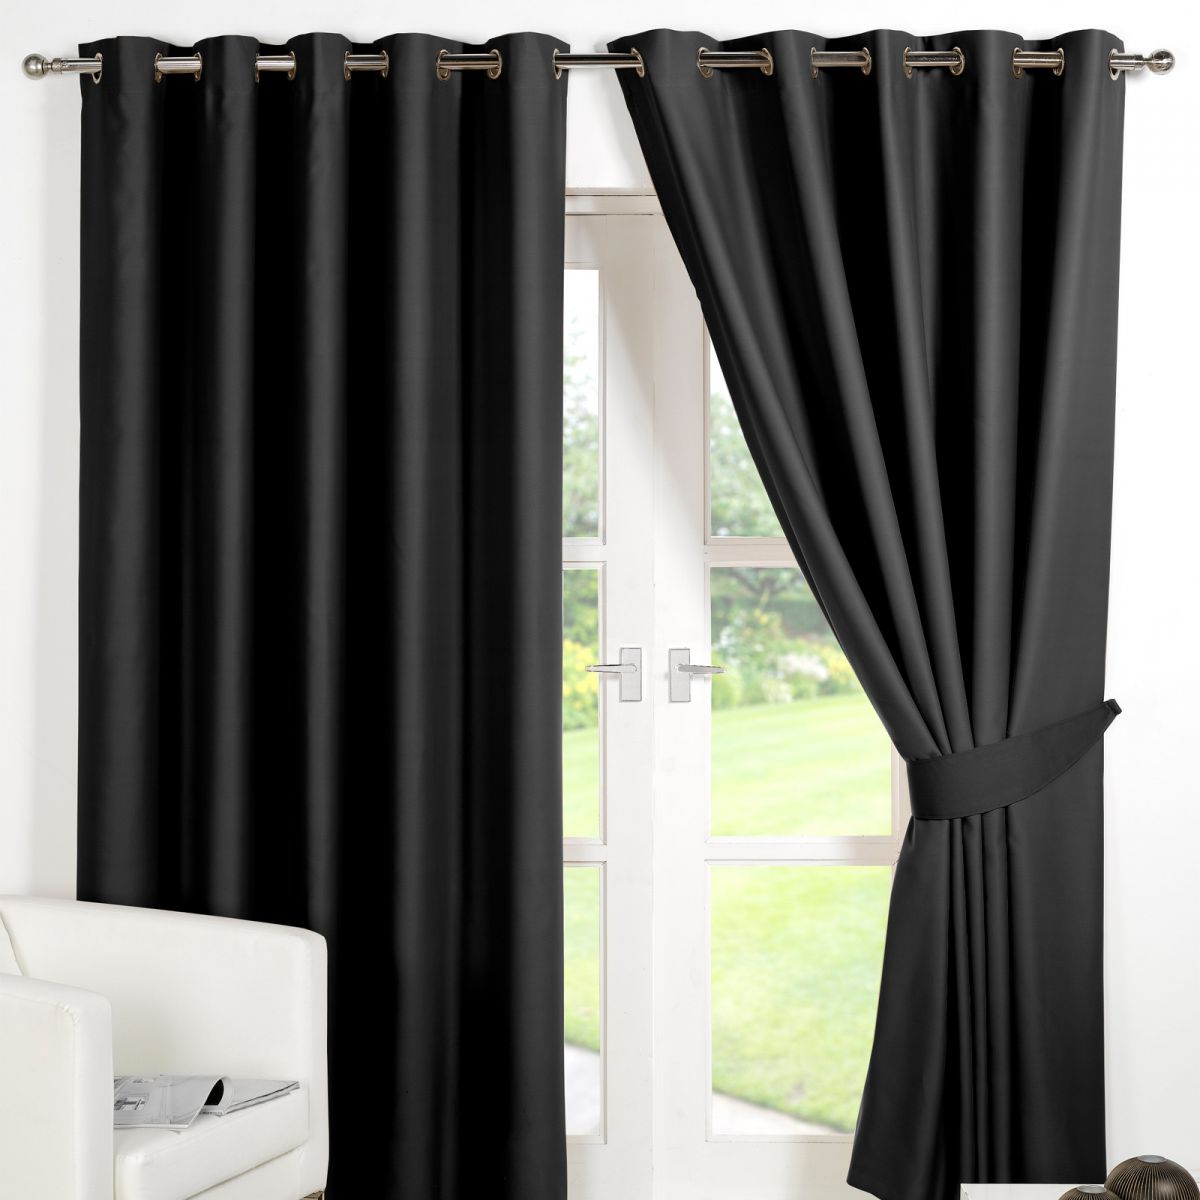 Dreamscene Eyelet Blackout Curtains - Black, 46" X 72"